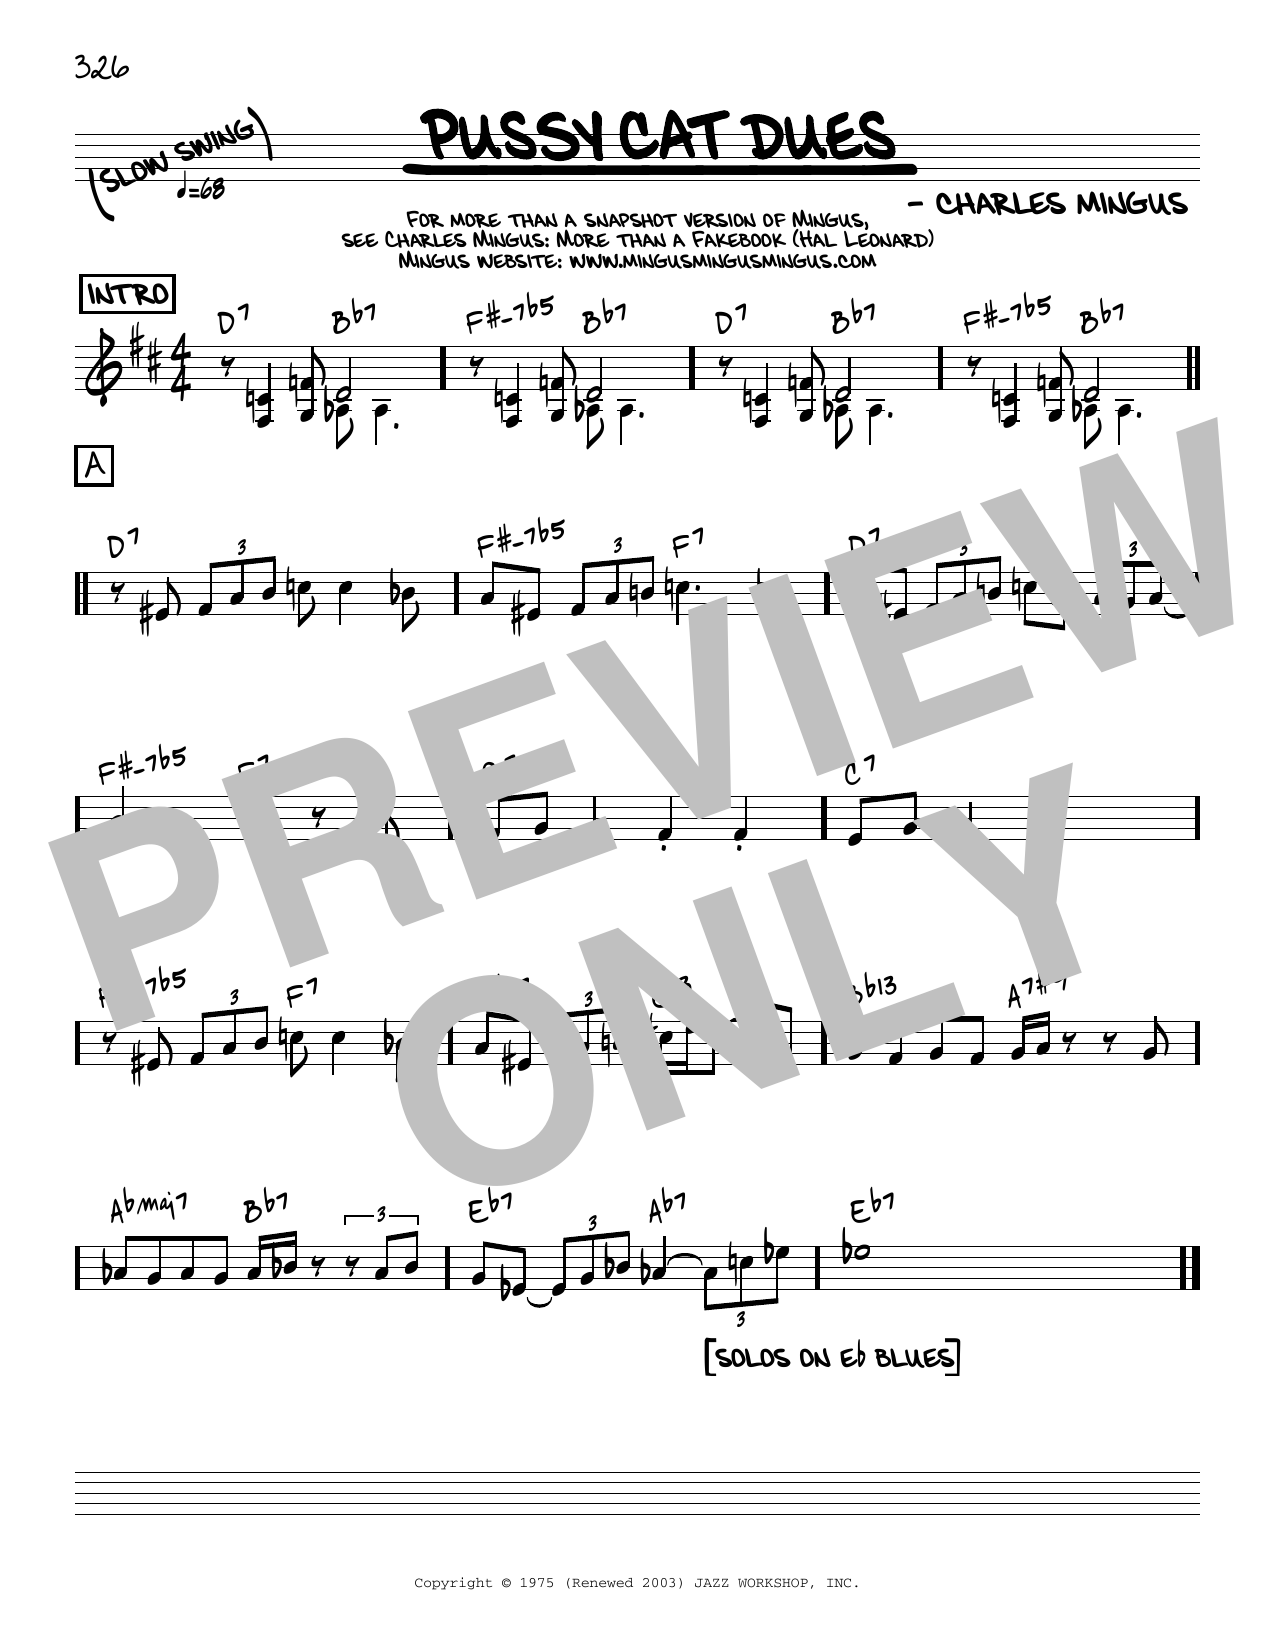 Download Charles Mingus Pussy Cat Dues [Reharmonized version] ( Sheet Music